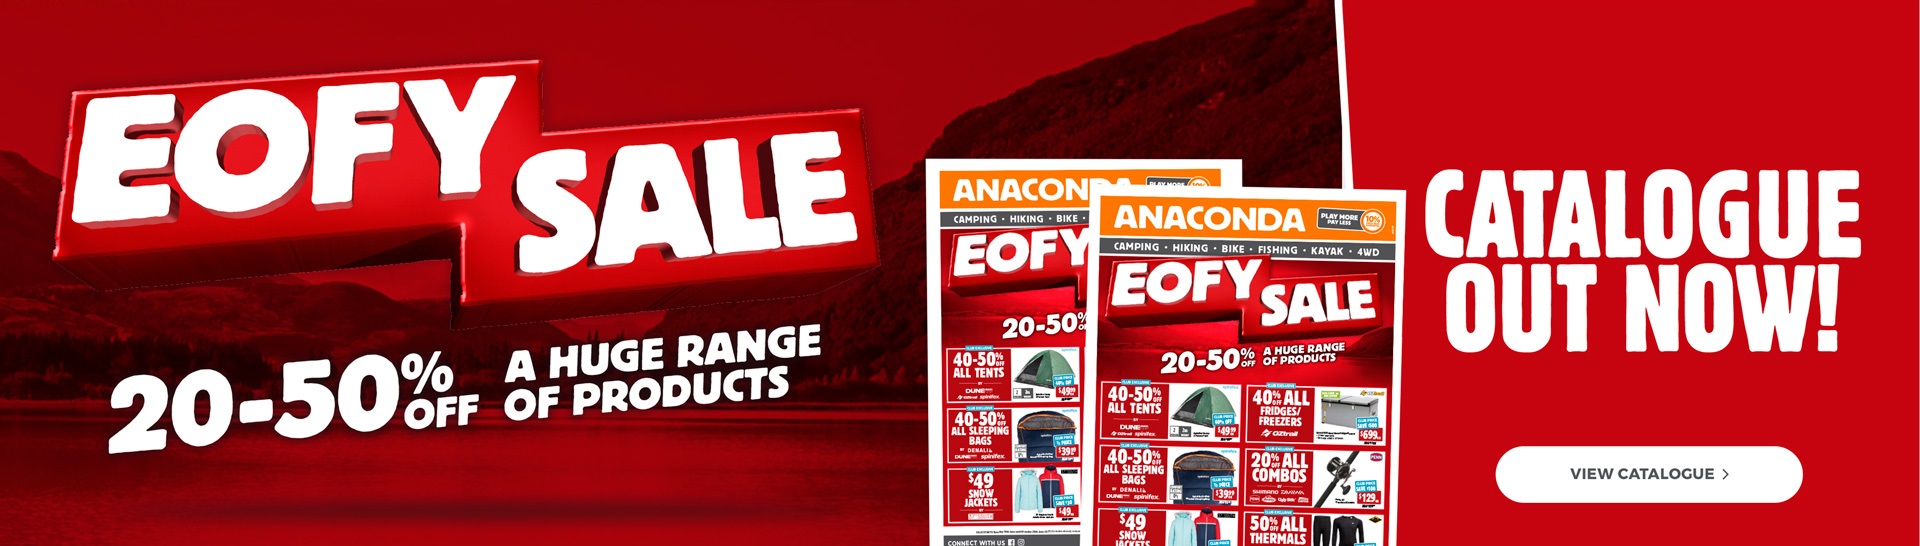 20-50% OFF EOFY sale at Anaconda